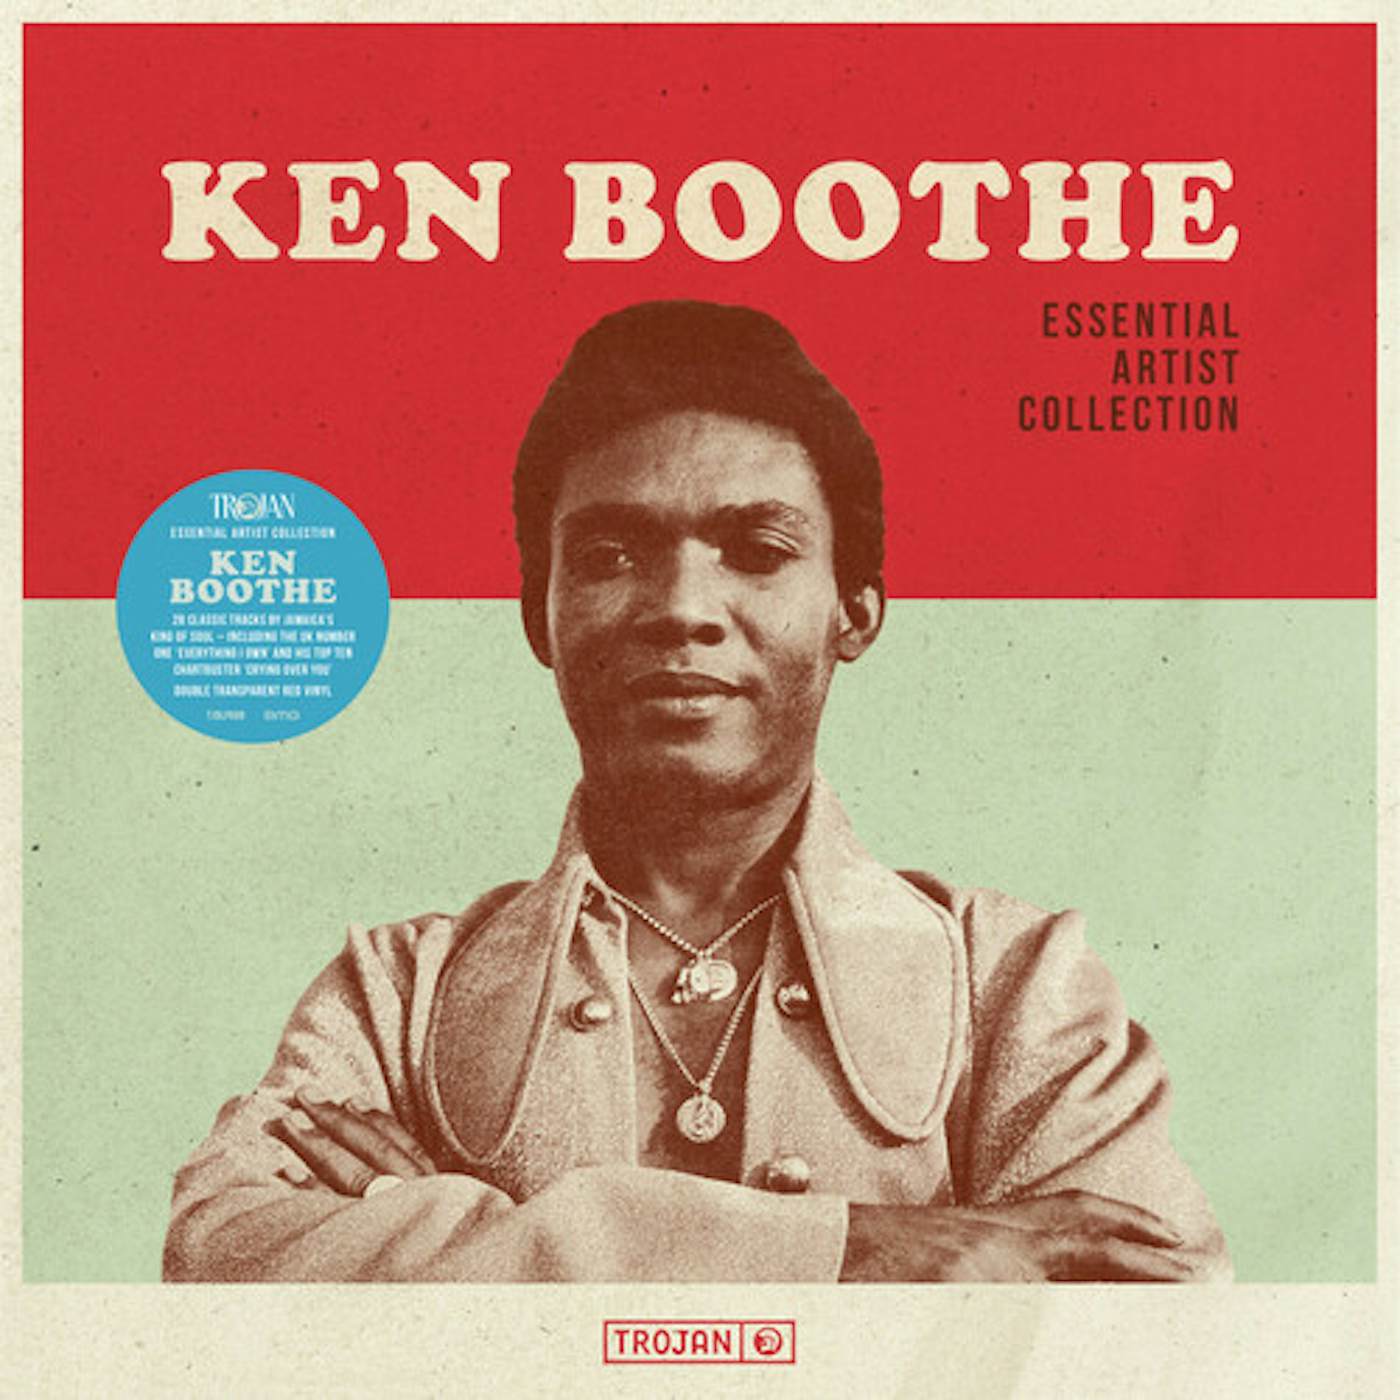 Essential Artist Collection - Ken Boothe Vinyl Record